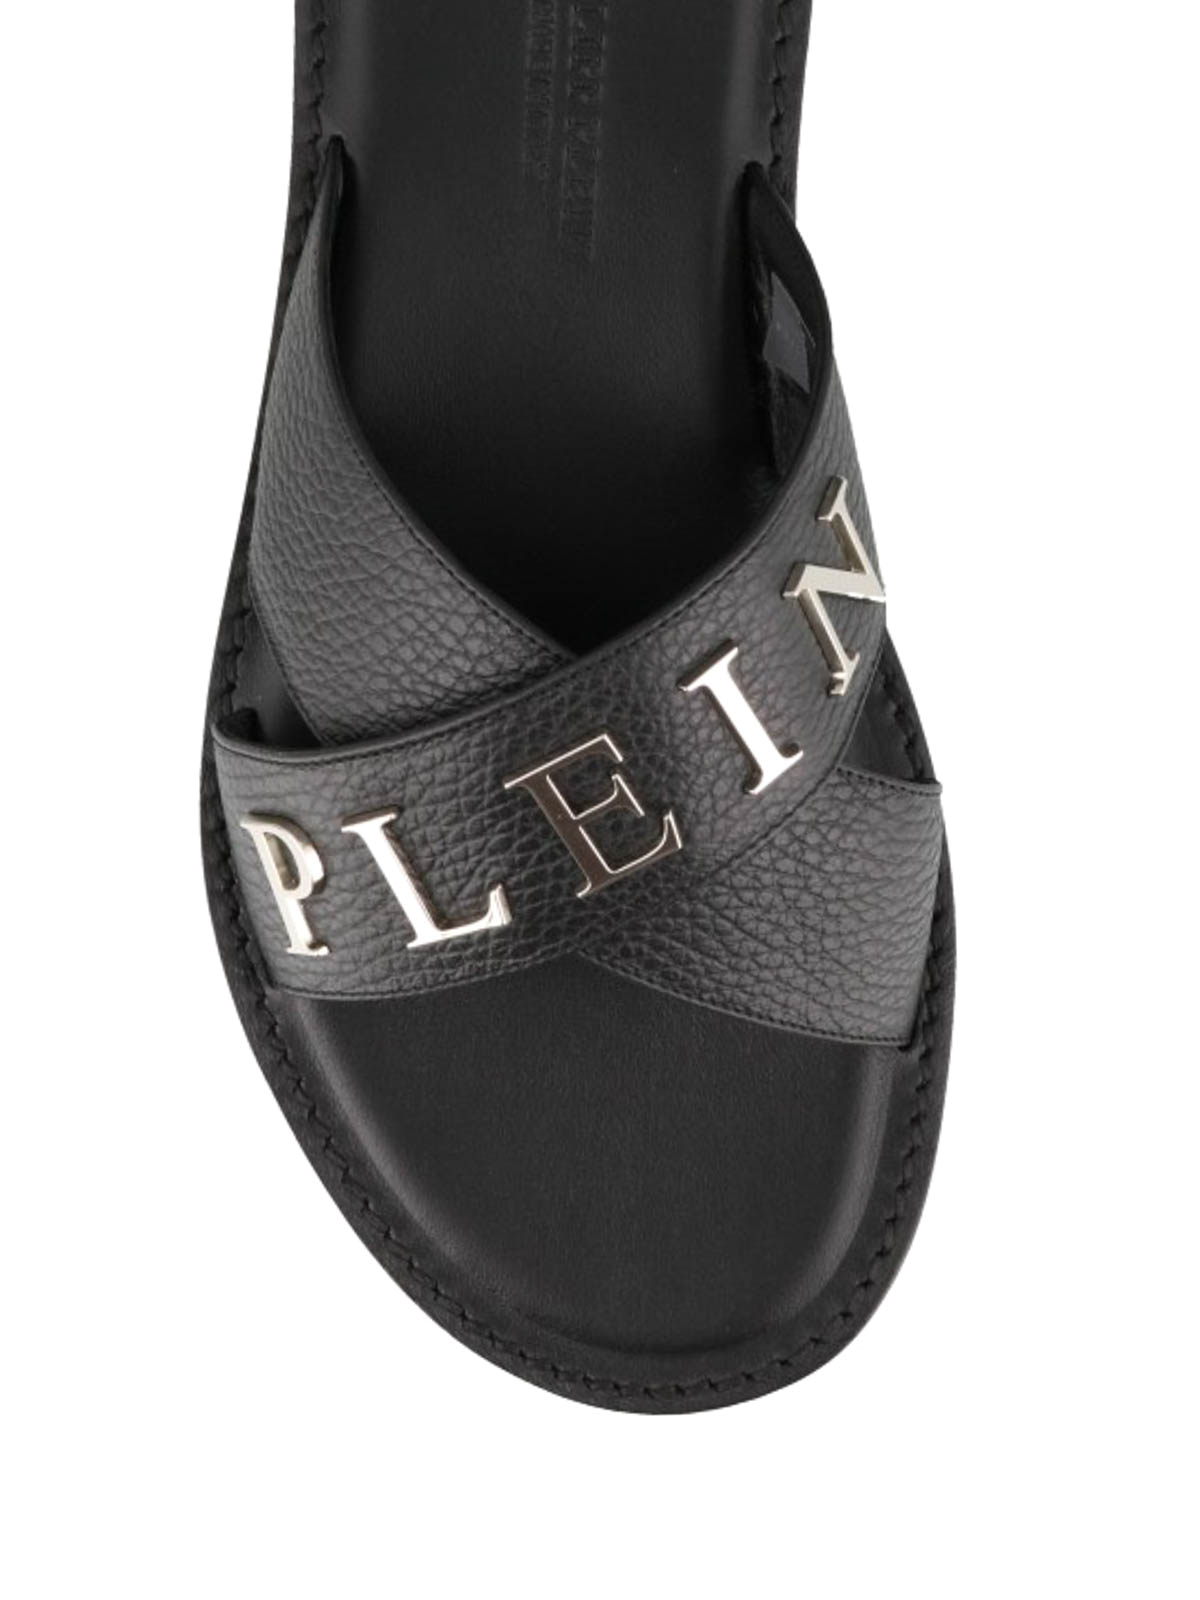 Tuesday mammalian Extreme Sandals Philipp Plein - Metallic logo black leather flat sandals -  MSA0089PLE006N02